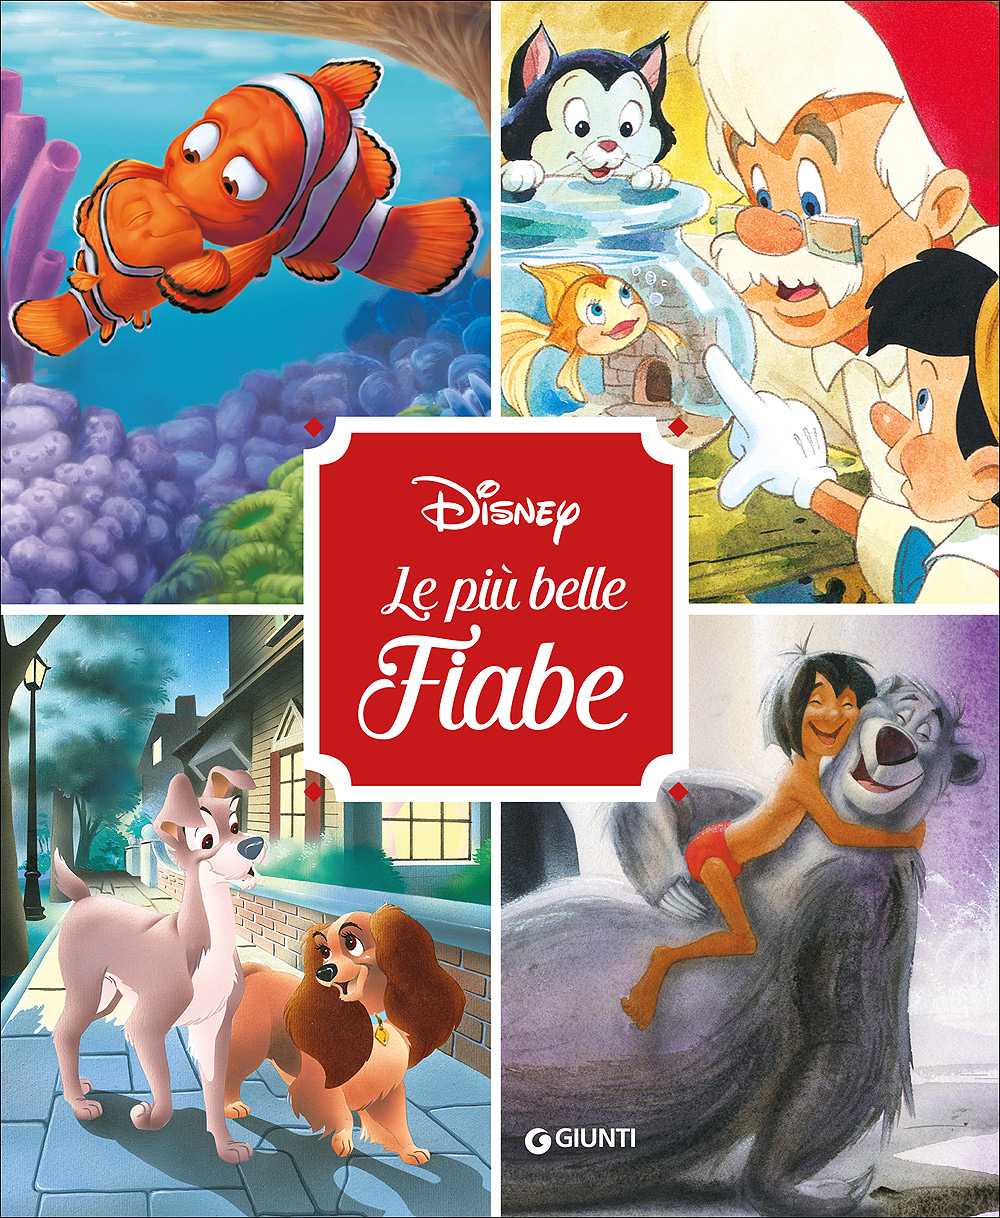 Fiabe Collection - Le più belle Fiabe Disney